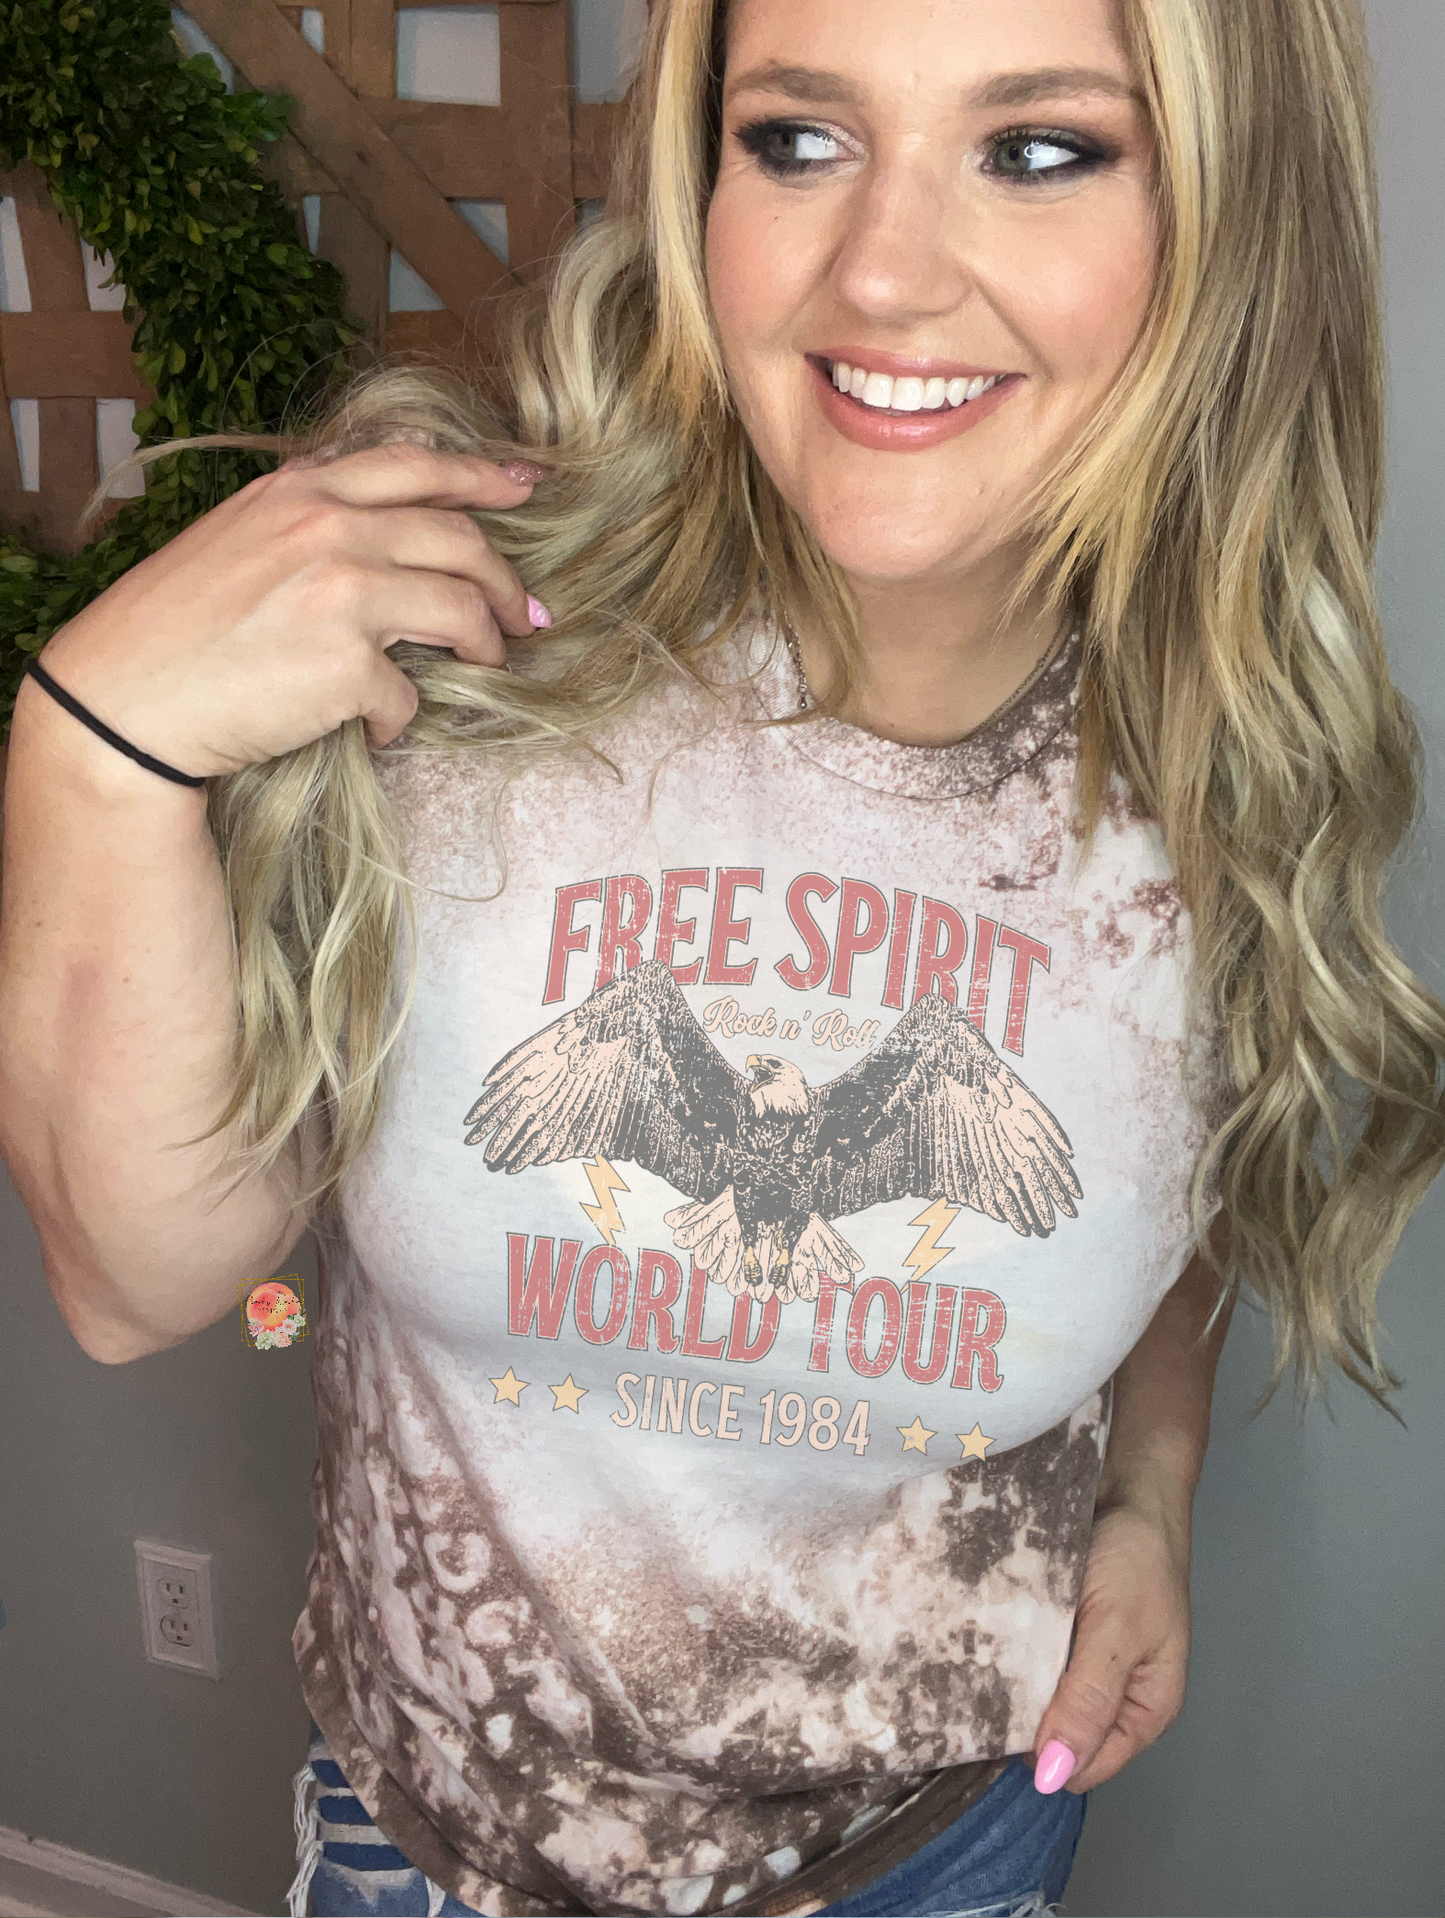 Free spirit world tour